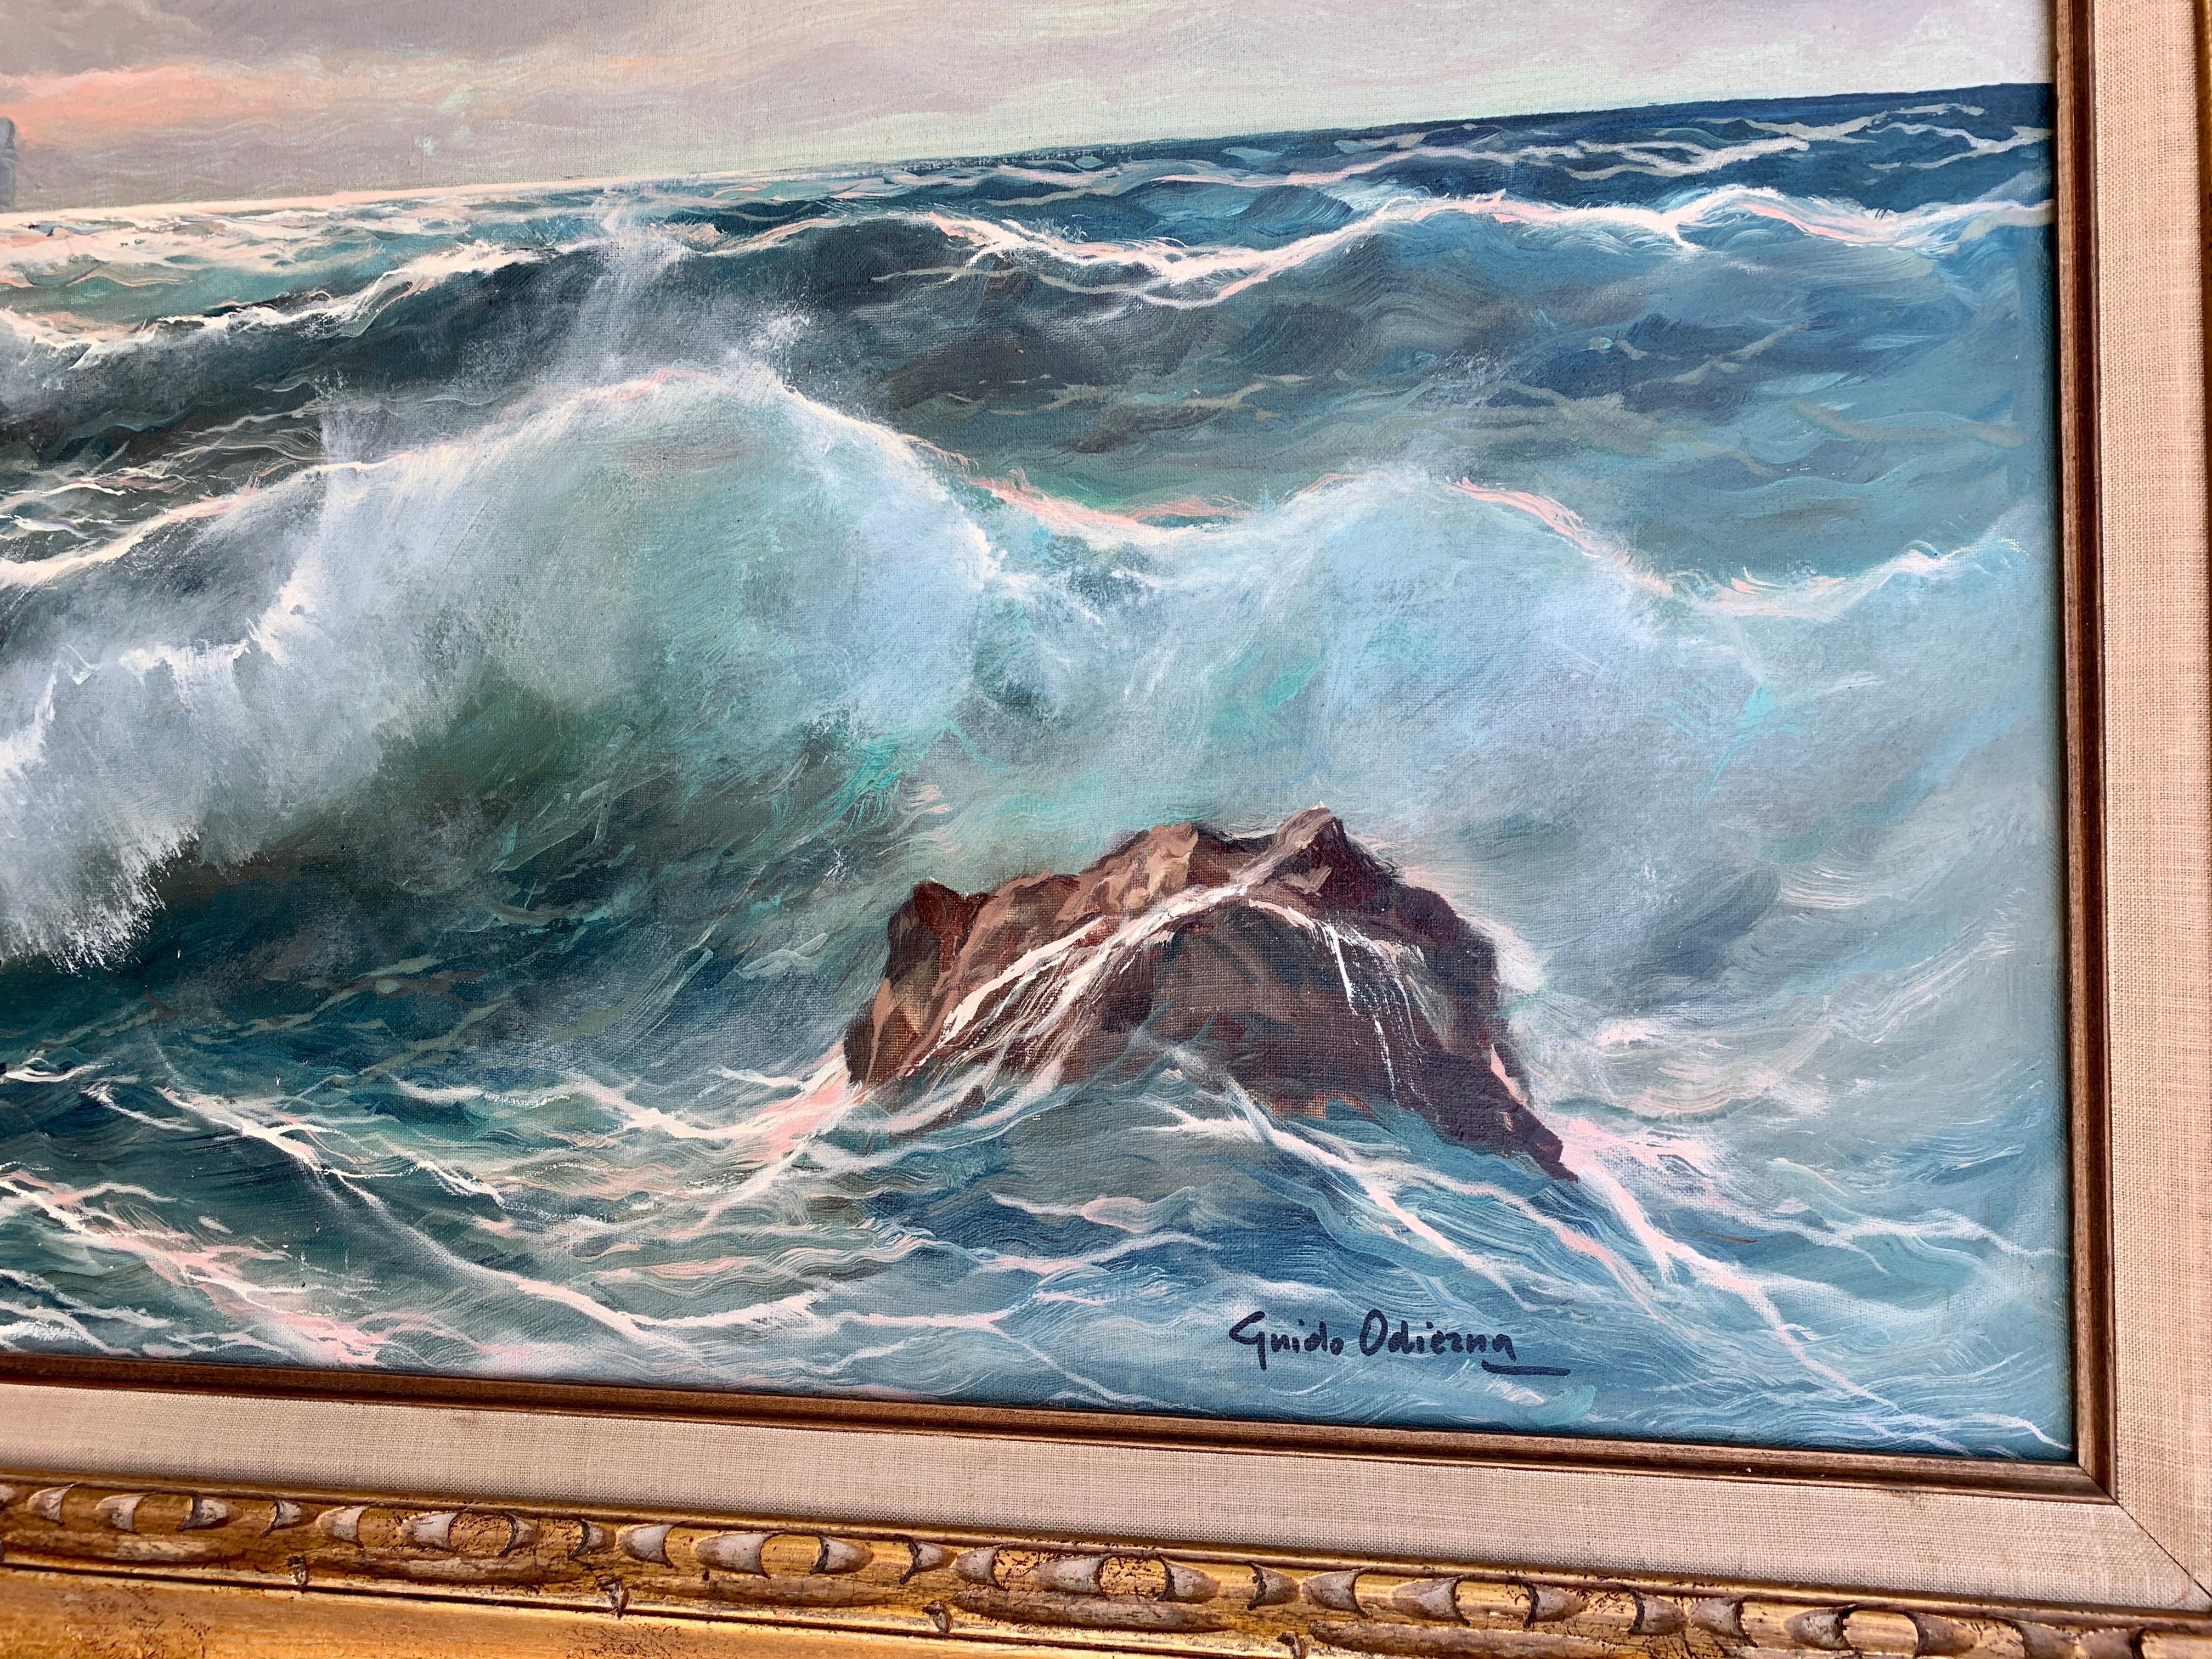 Southern Italian Coastal sea scene, waves crashing onto rocks, with sunsetting - Painting by Guido Odierna